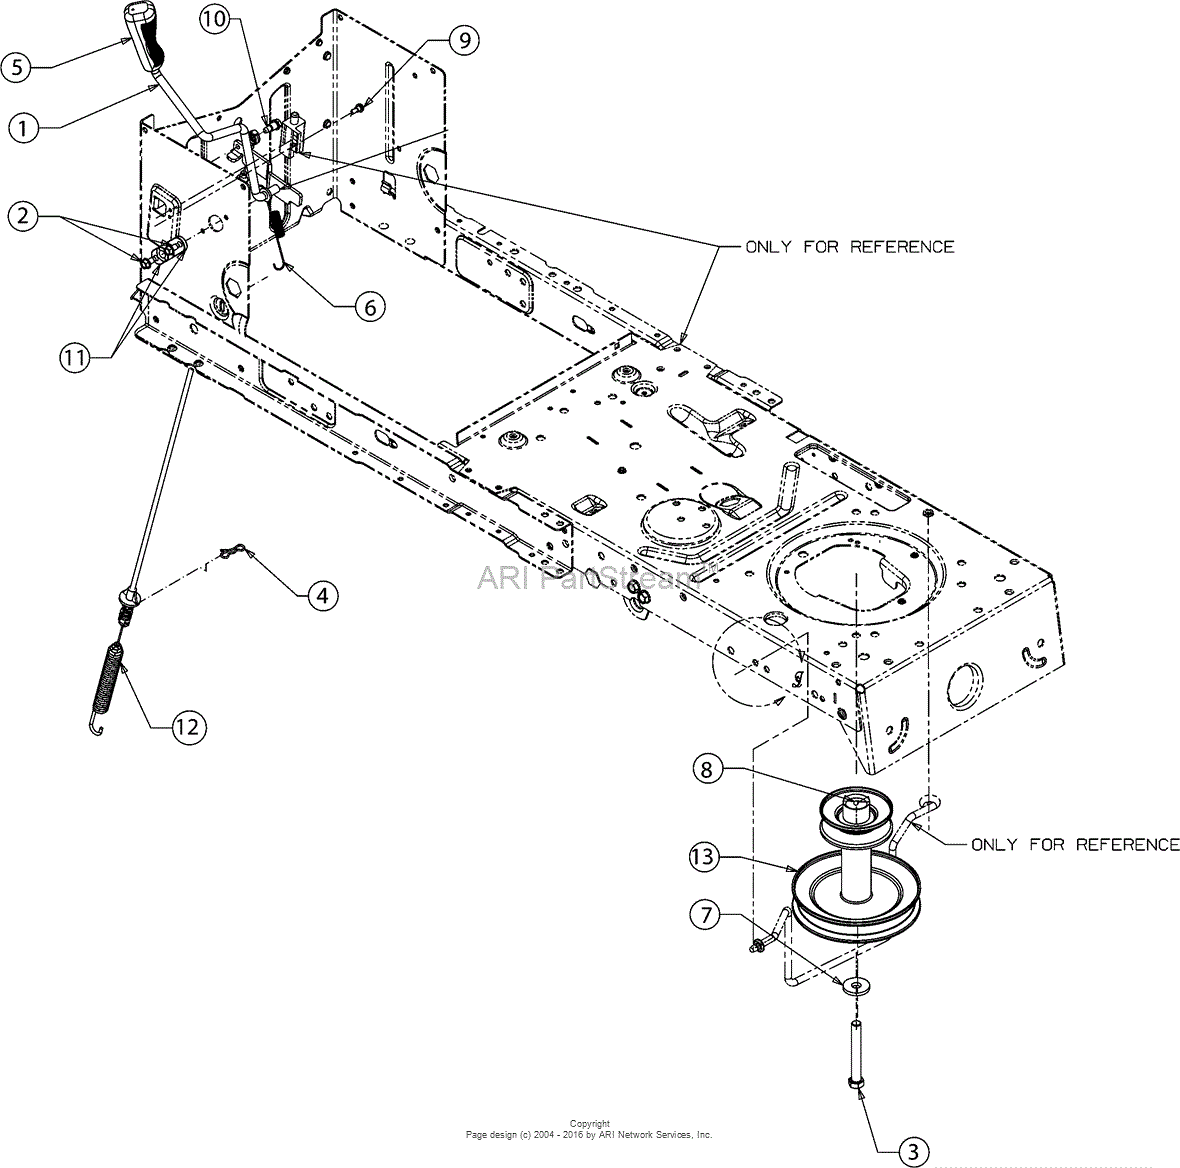 Craftsman T1400 Parts Diagram